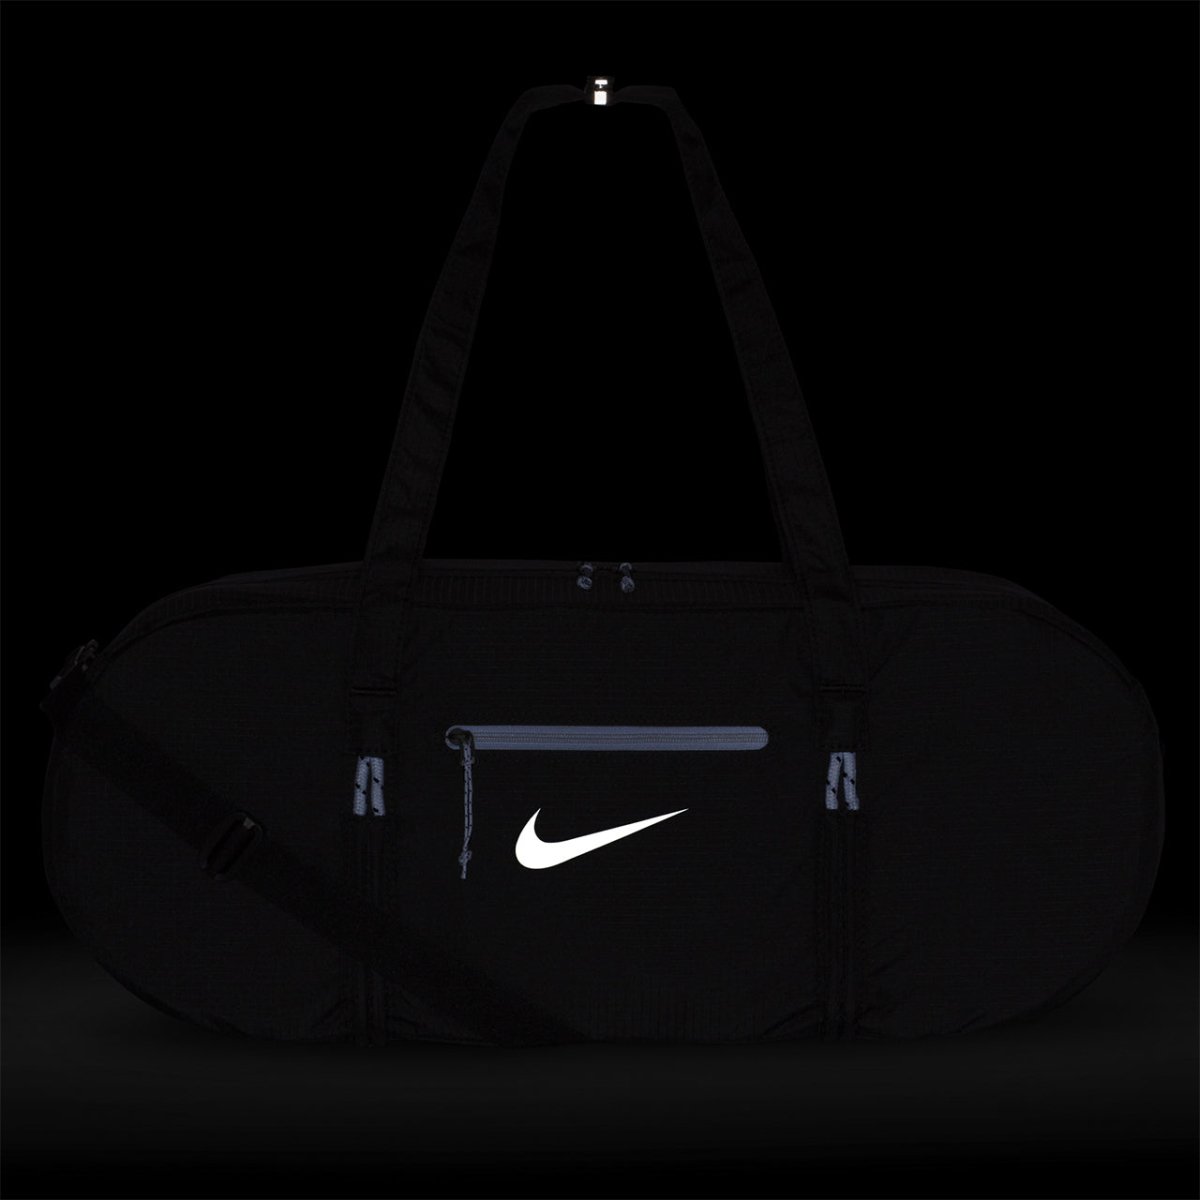 Nike Stash Duffle Bag (Schwarz / Weiß)  - Allike Store